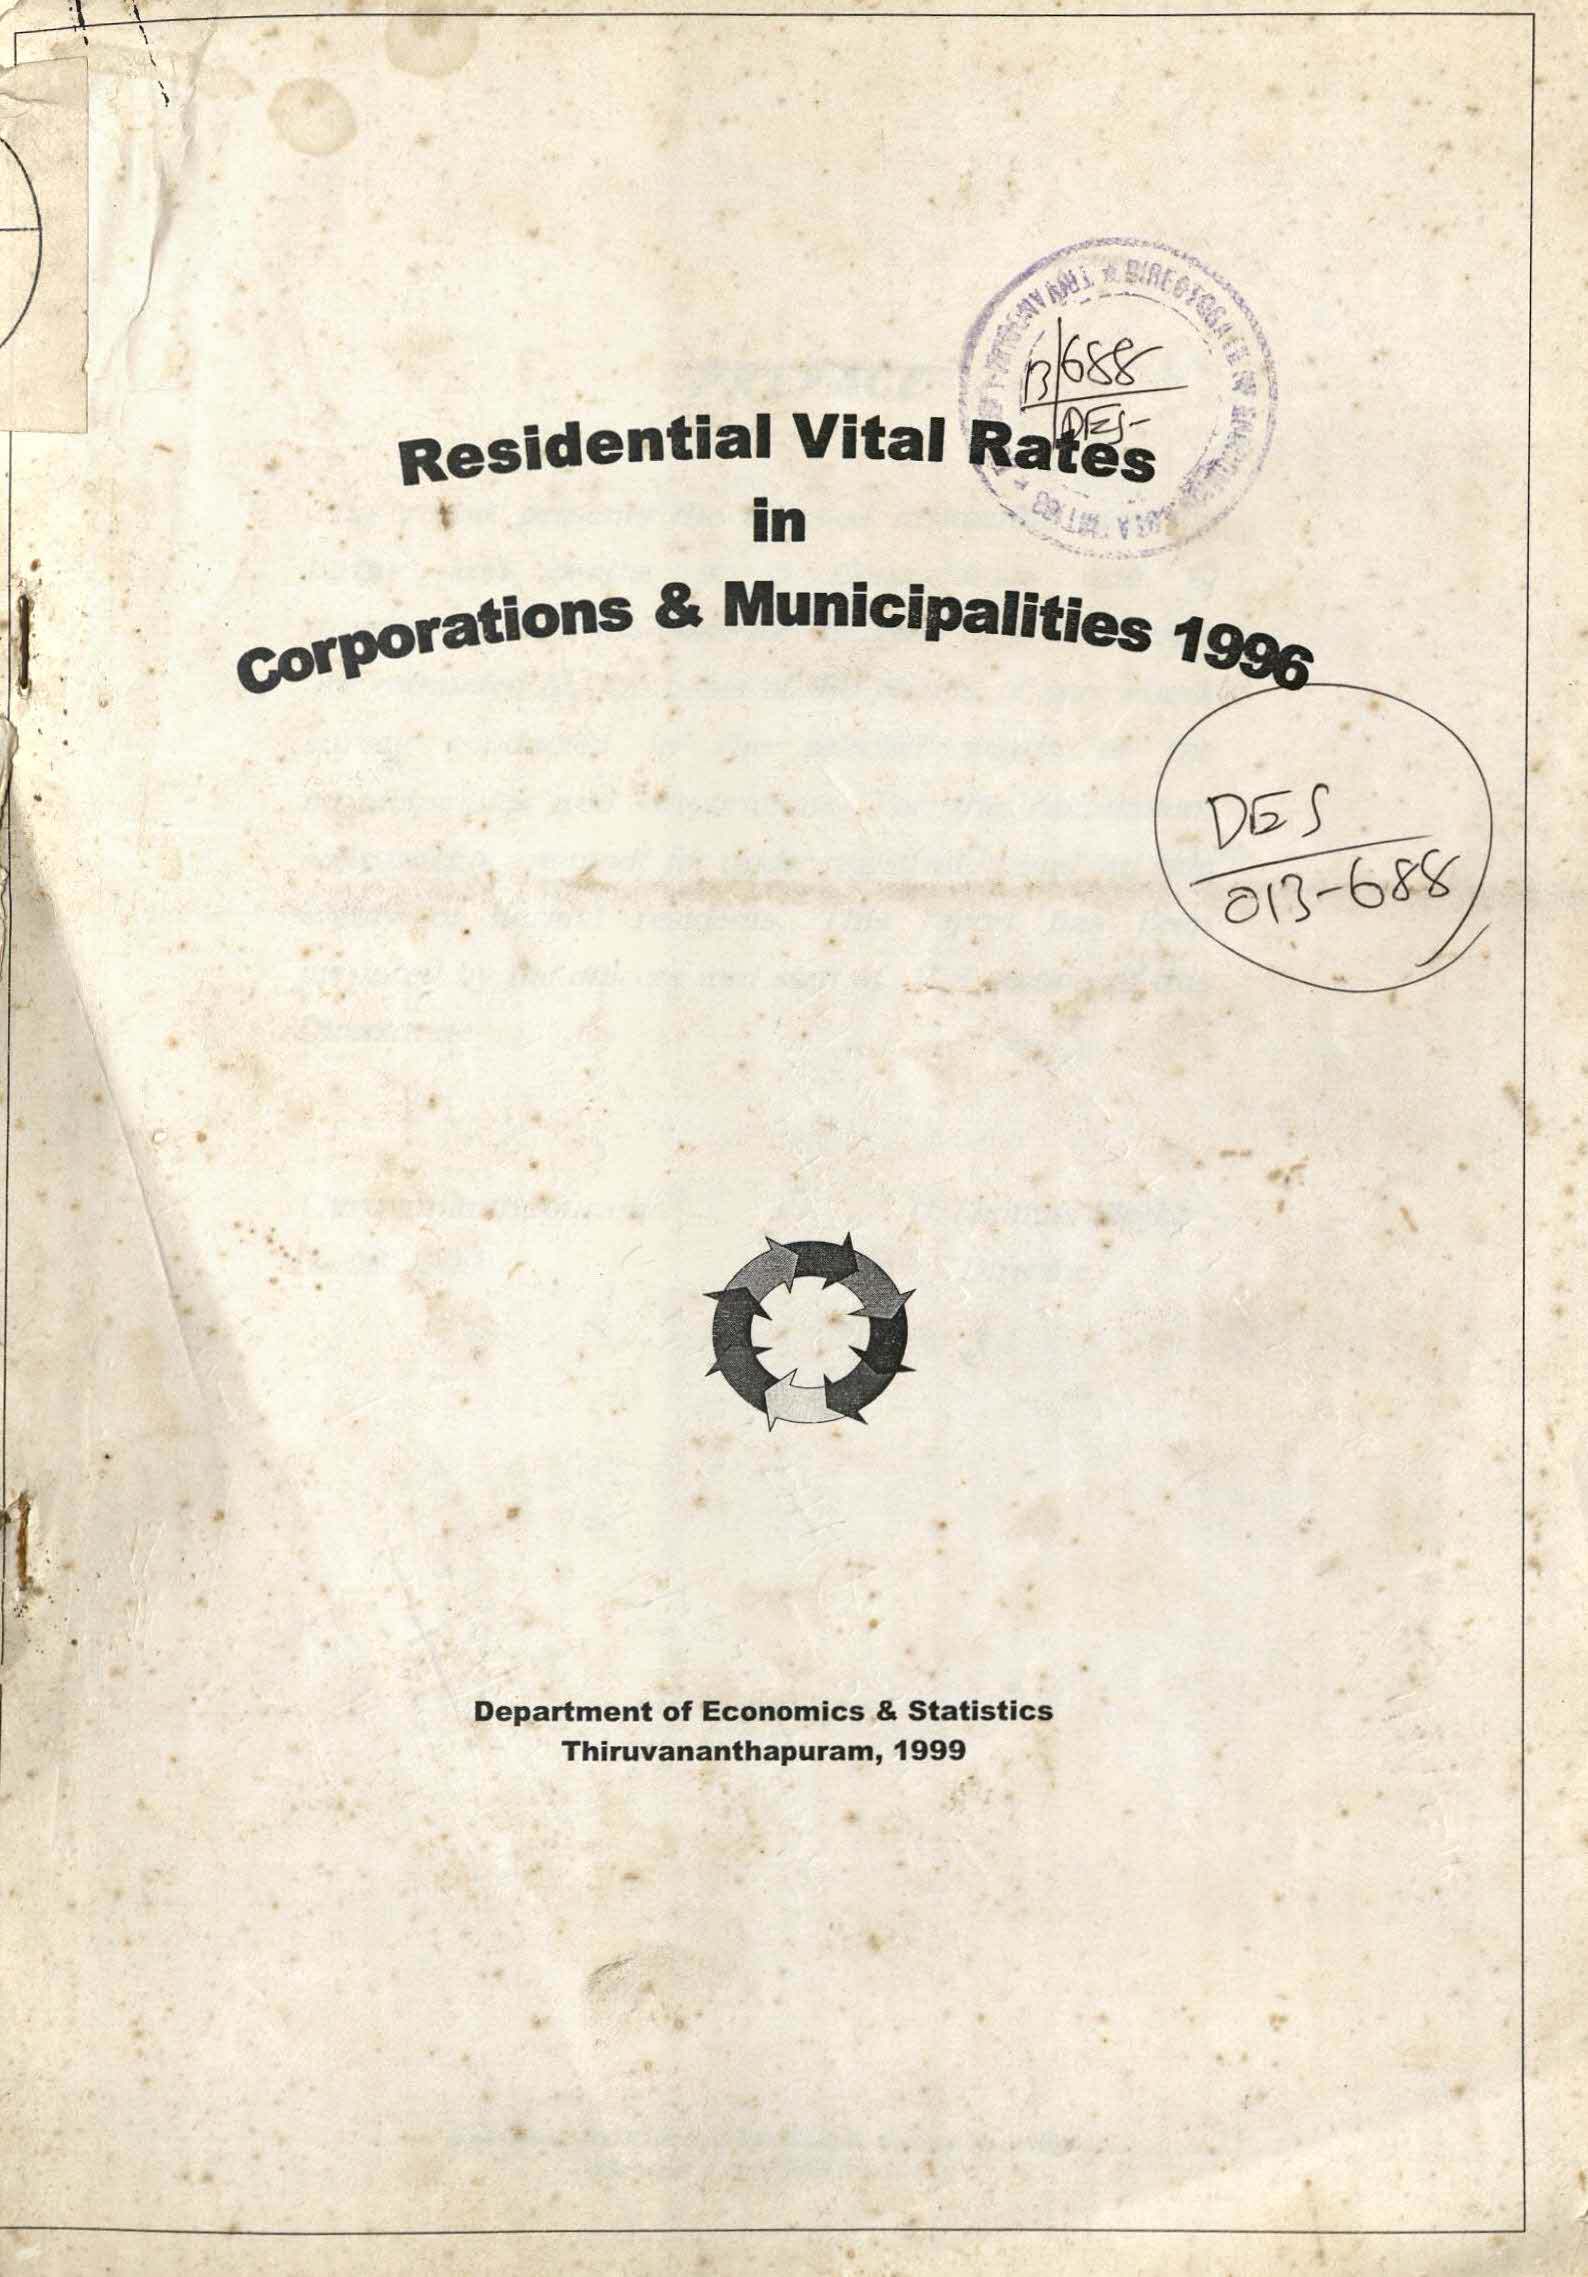 Residential vital Statistics Corporation and Municipalities  1996